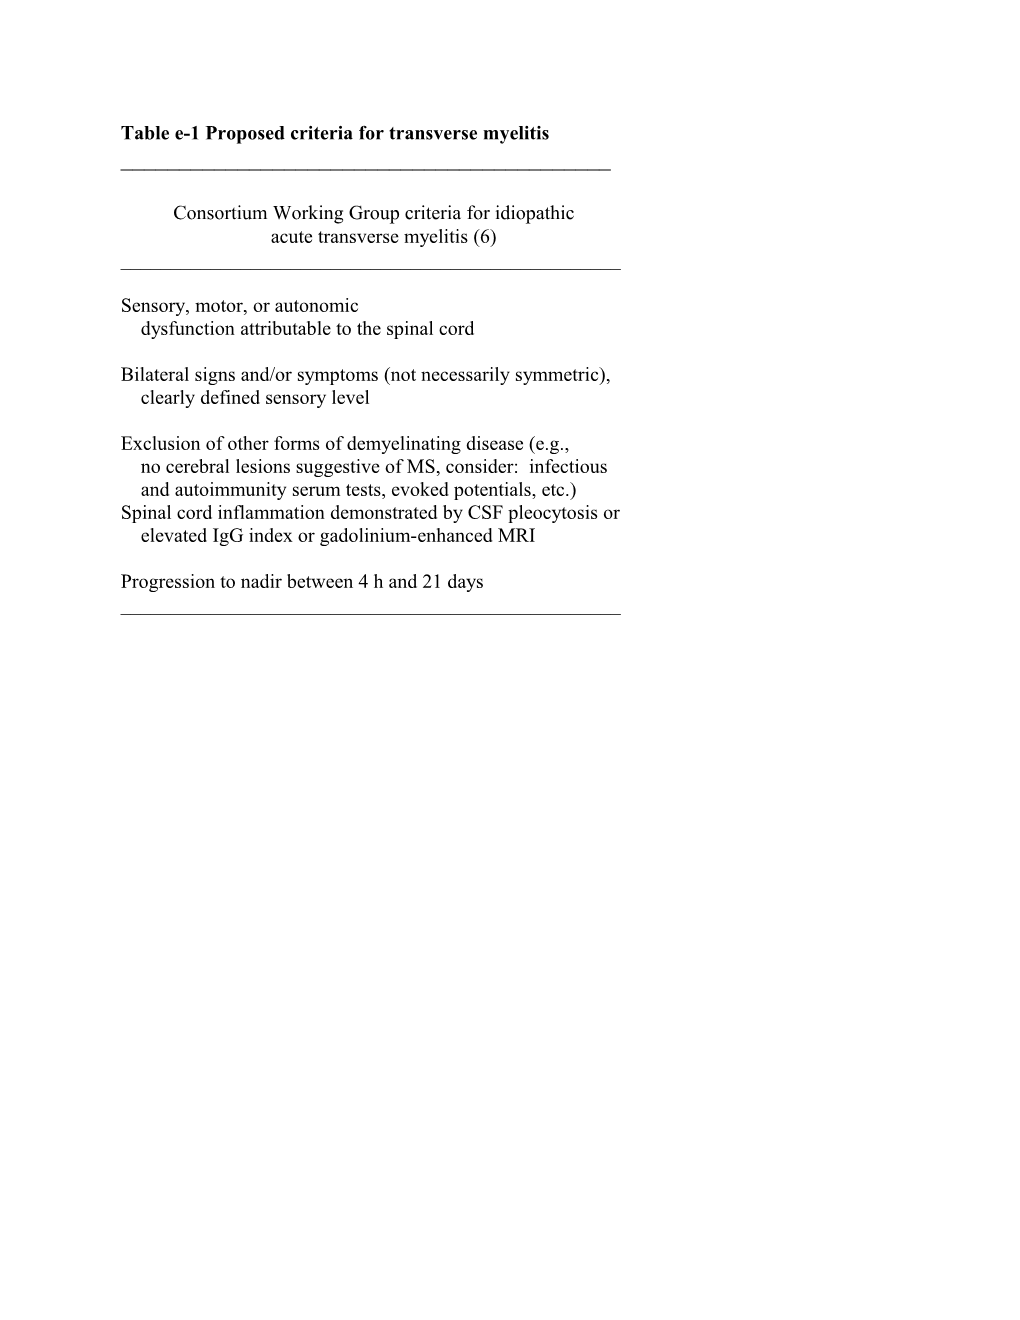 Table E-1 Proposed Criteria for Transverse Myelitis